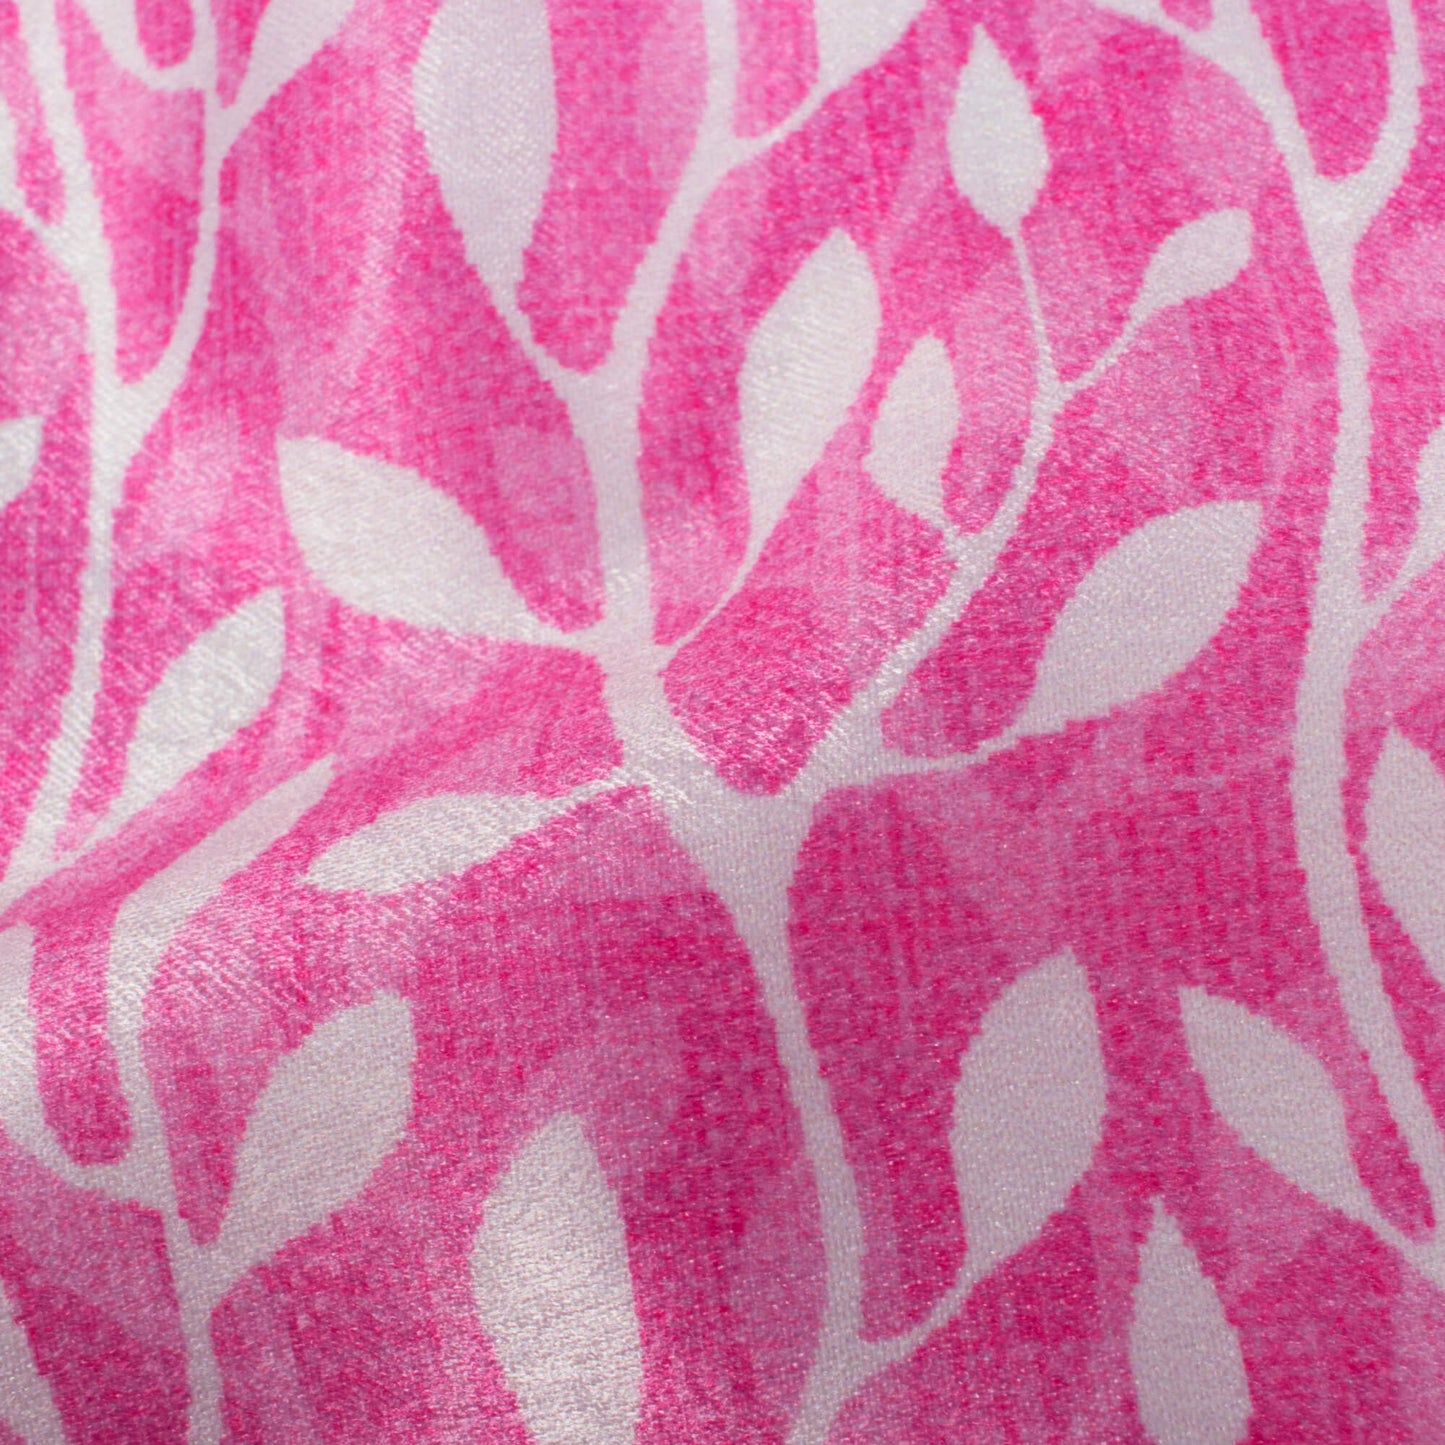 Taffy Pink And White Leaf Pattern Digital Print Lush Satin Fabric